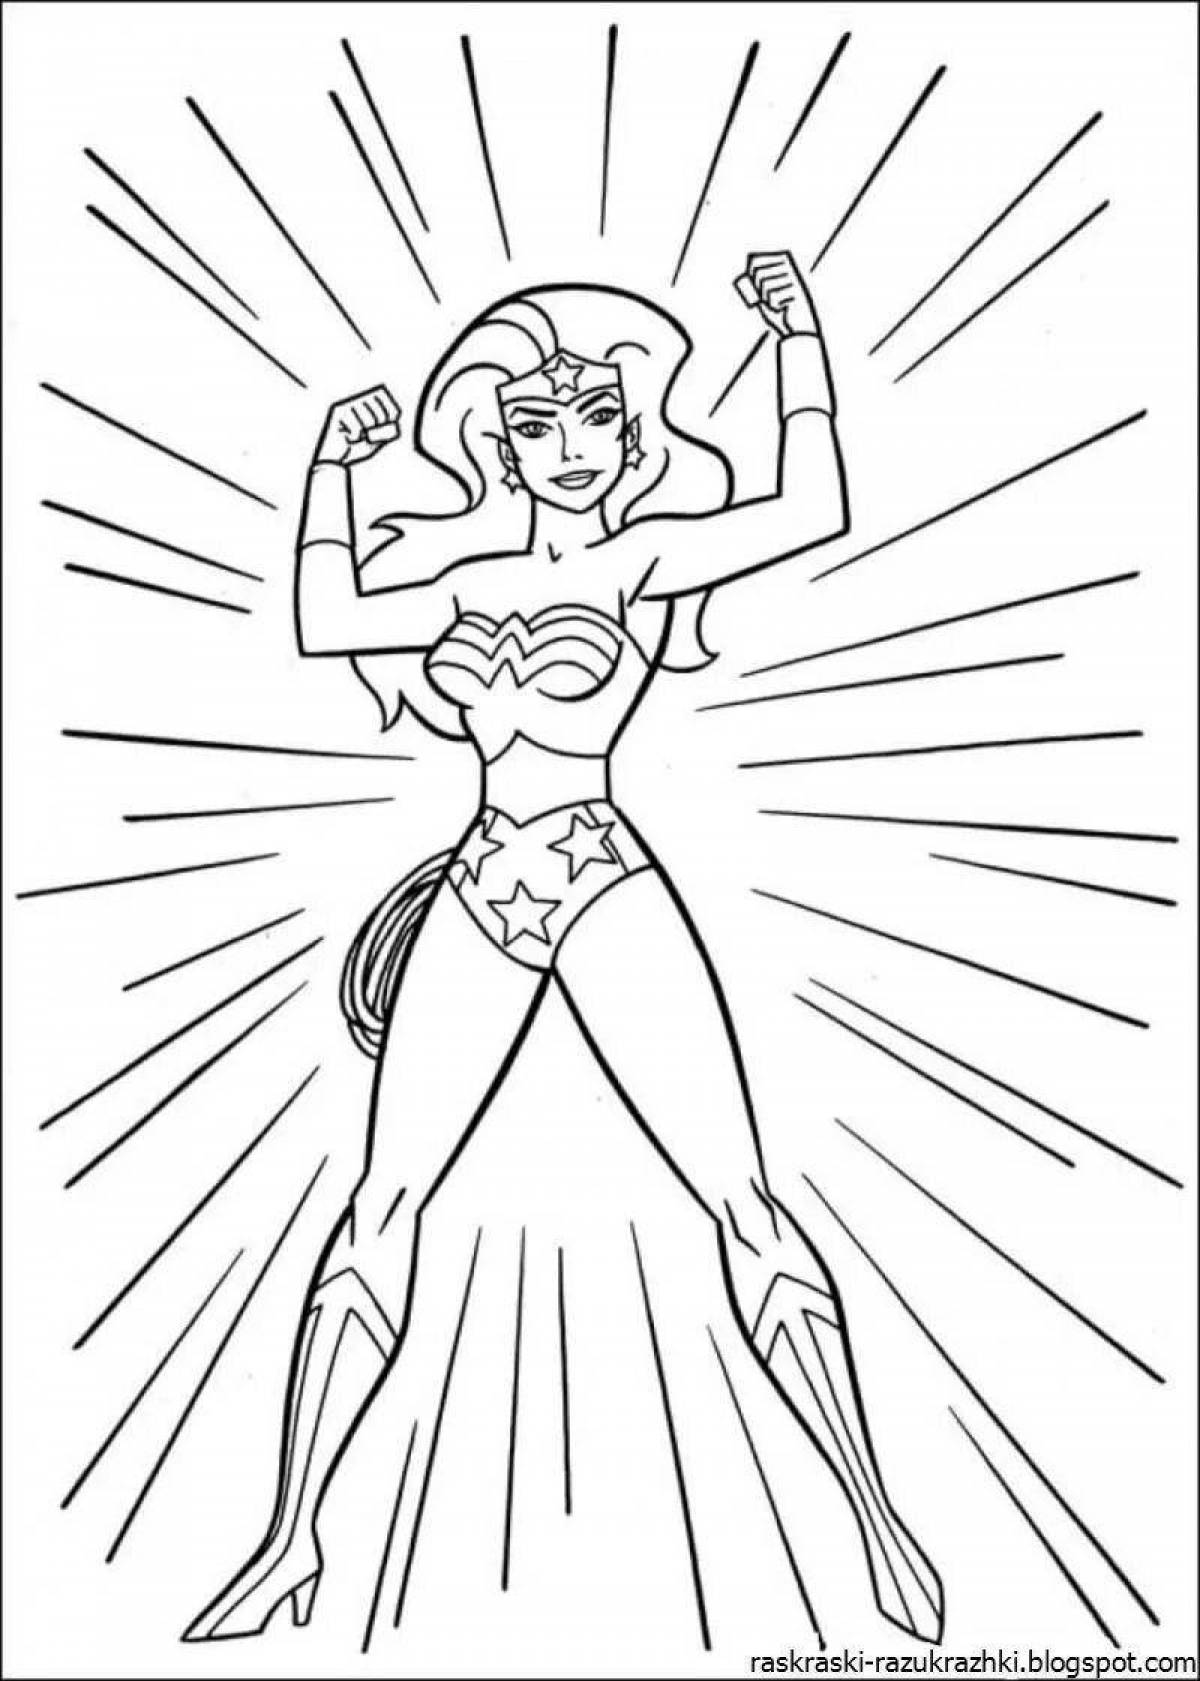 Shiny superwoman coloring book